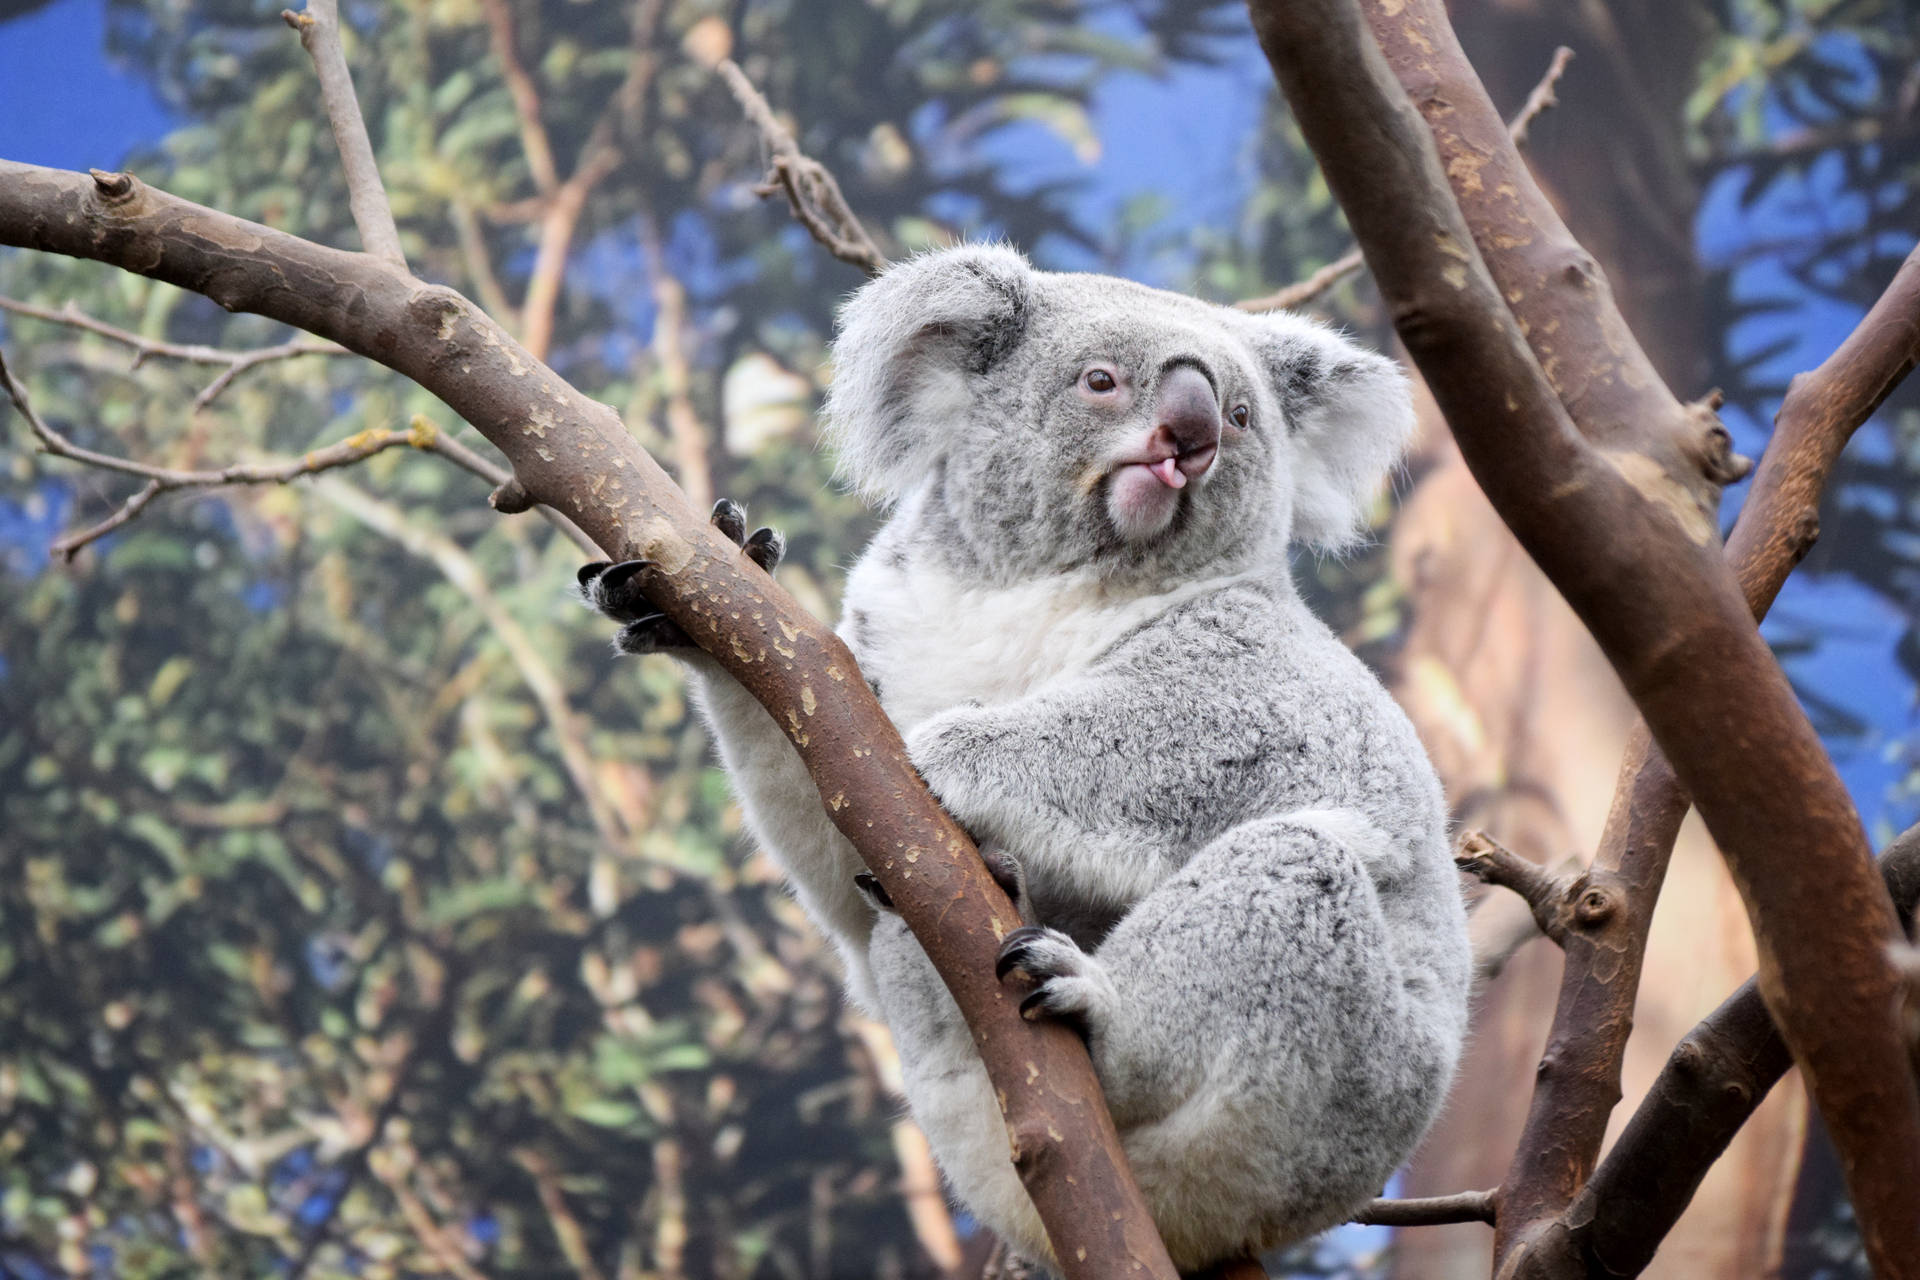 Koala Pictures